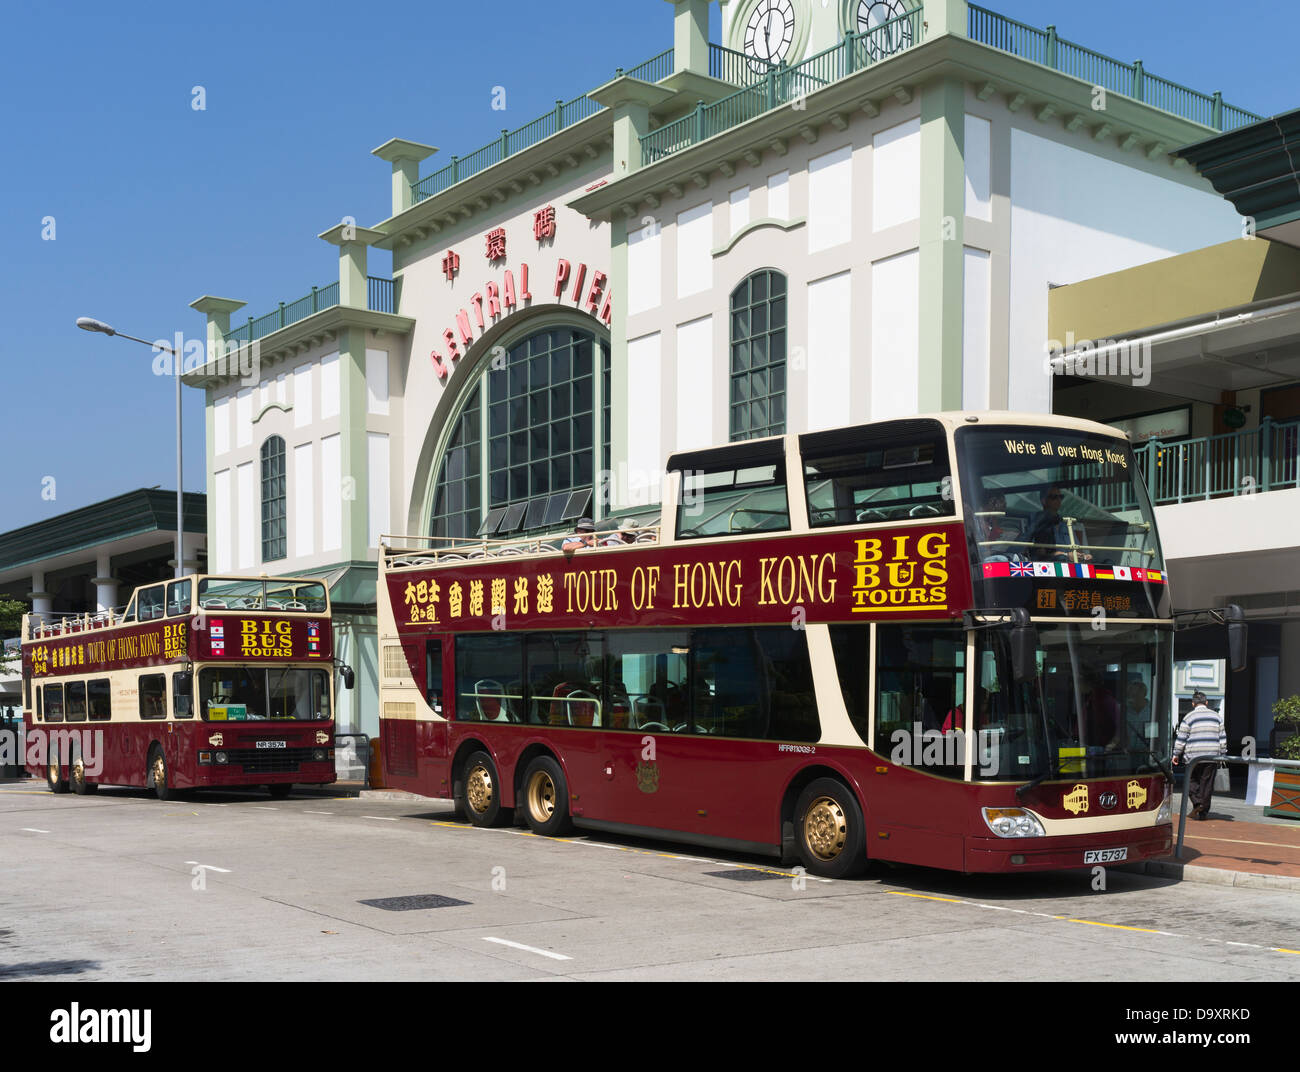 Dh Central Pier CENTRAL HONG KONG Big Bus Tours bus turistici a terminius open top sightseeing turismo cina Foto Stock